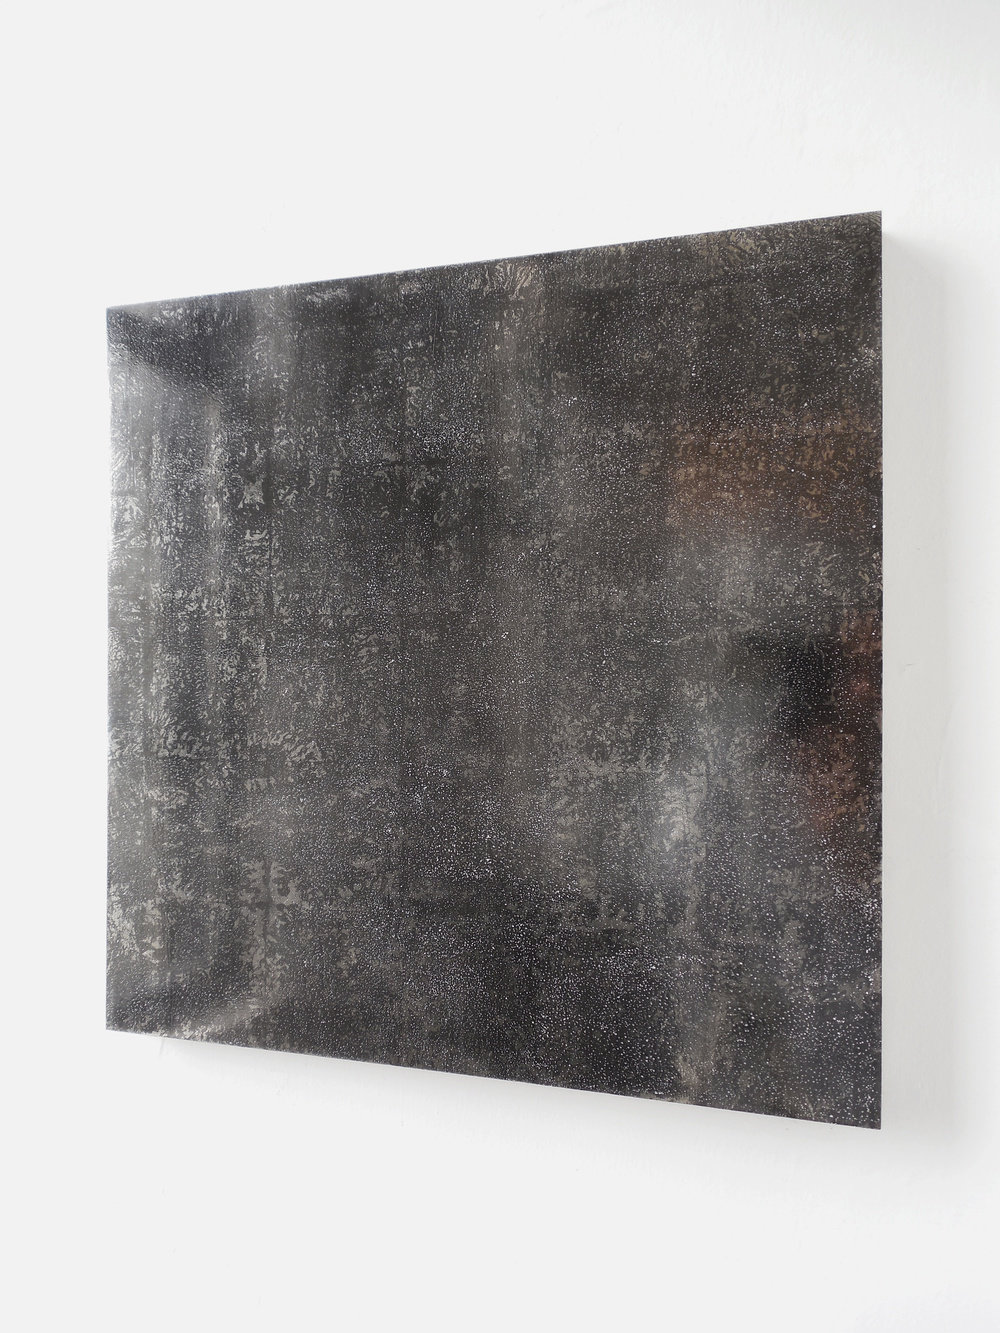 Mochizuki, untitled 4 1, 2015, gesso on board, clay, graphite, palladium leaf, 18 x 18 in. 45.72 x 45.72 cm cnon 56.059